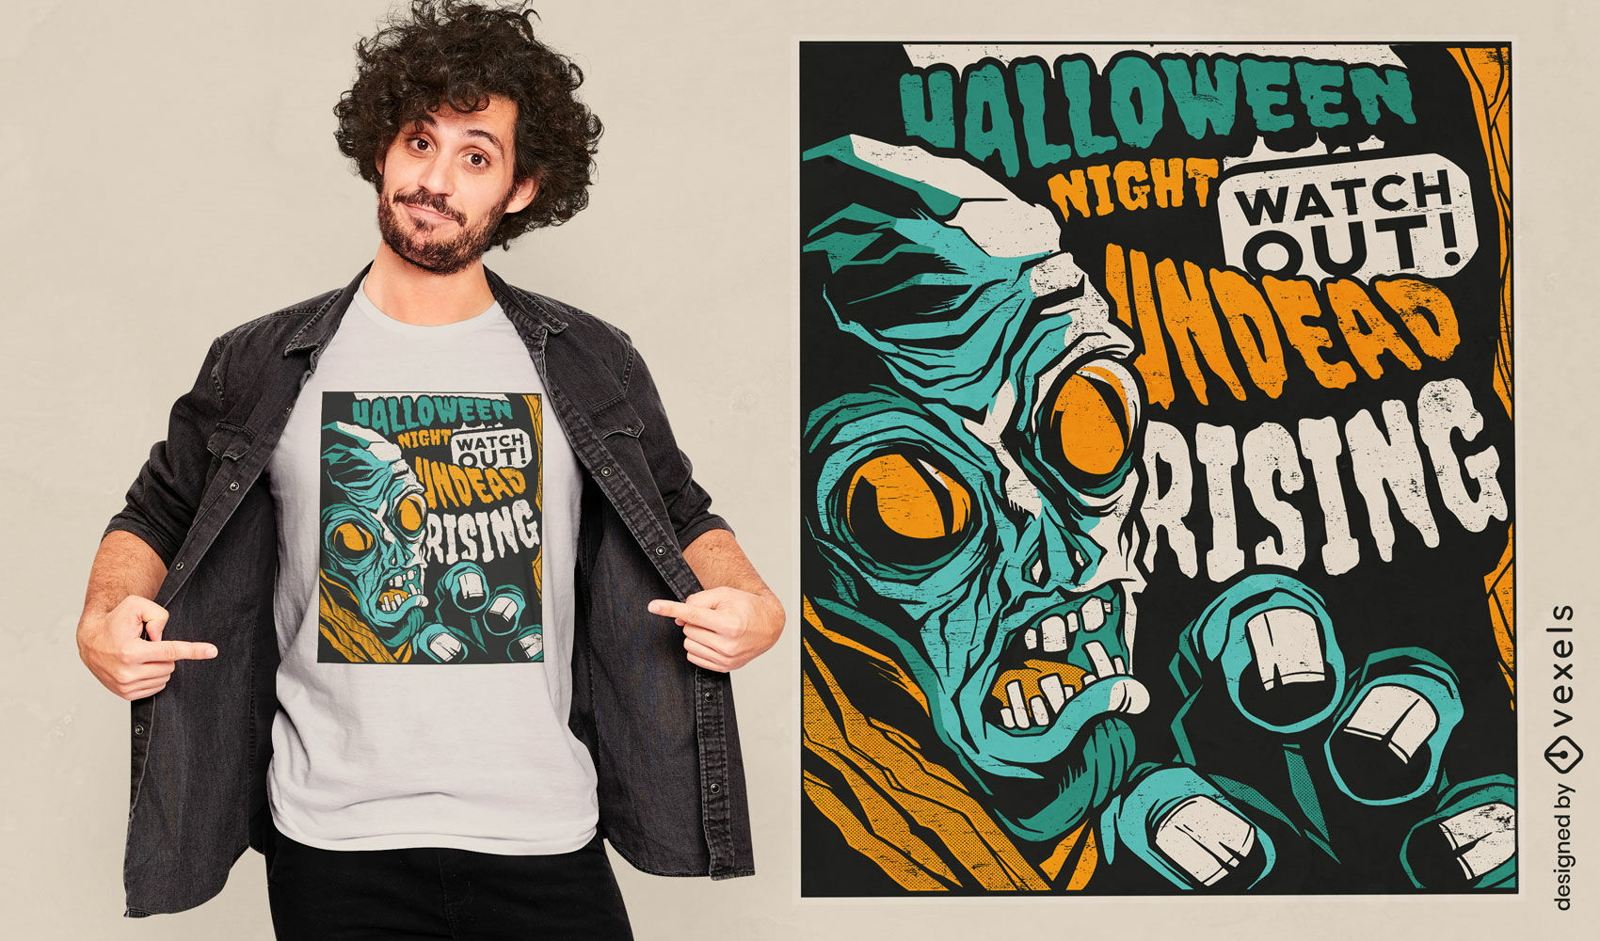 Vintage halloween monster t-shirt design